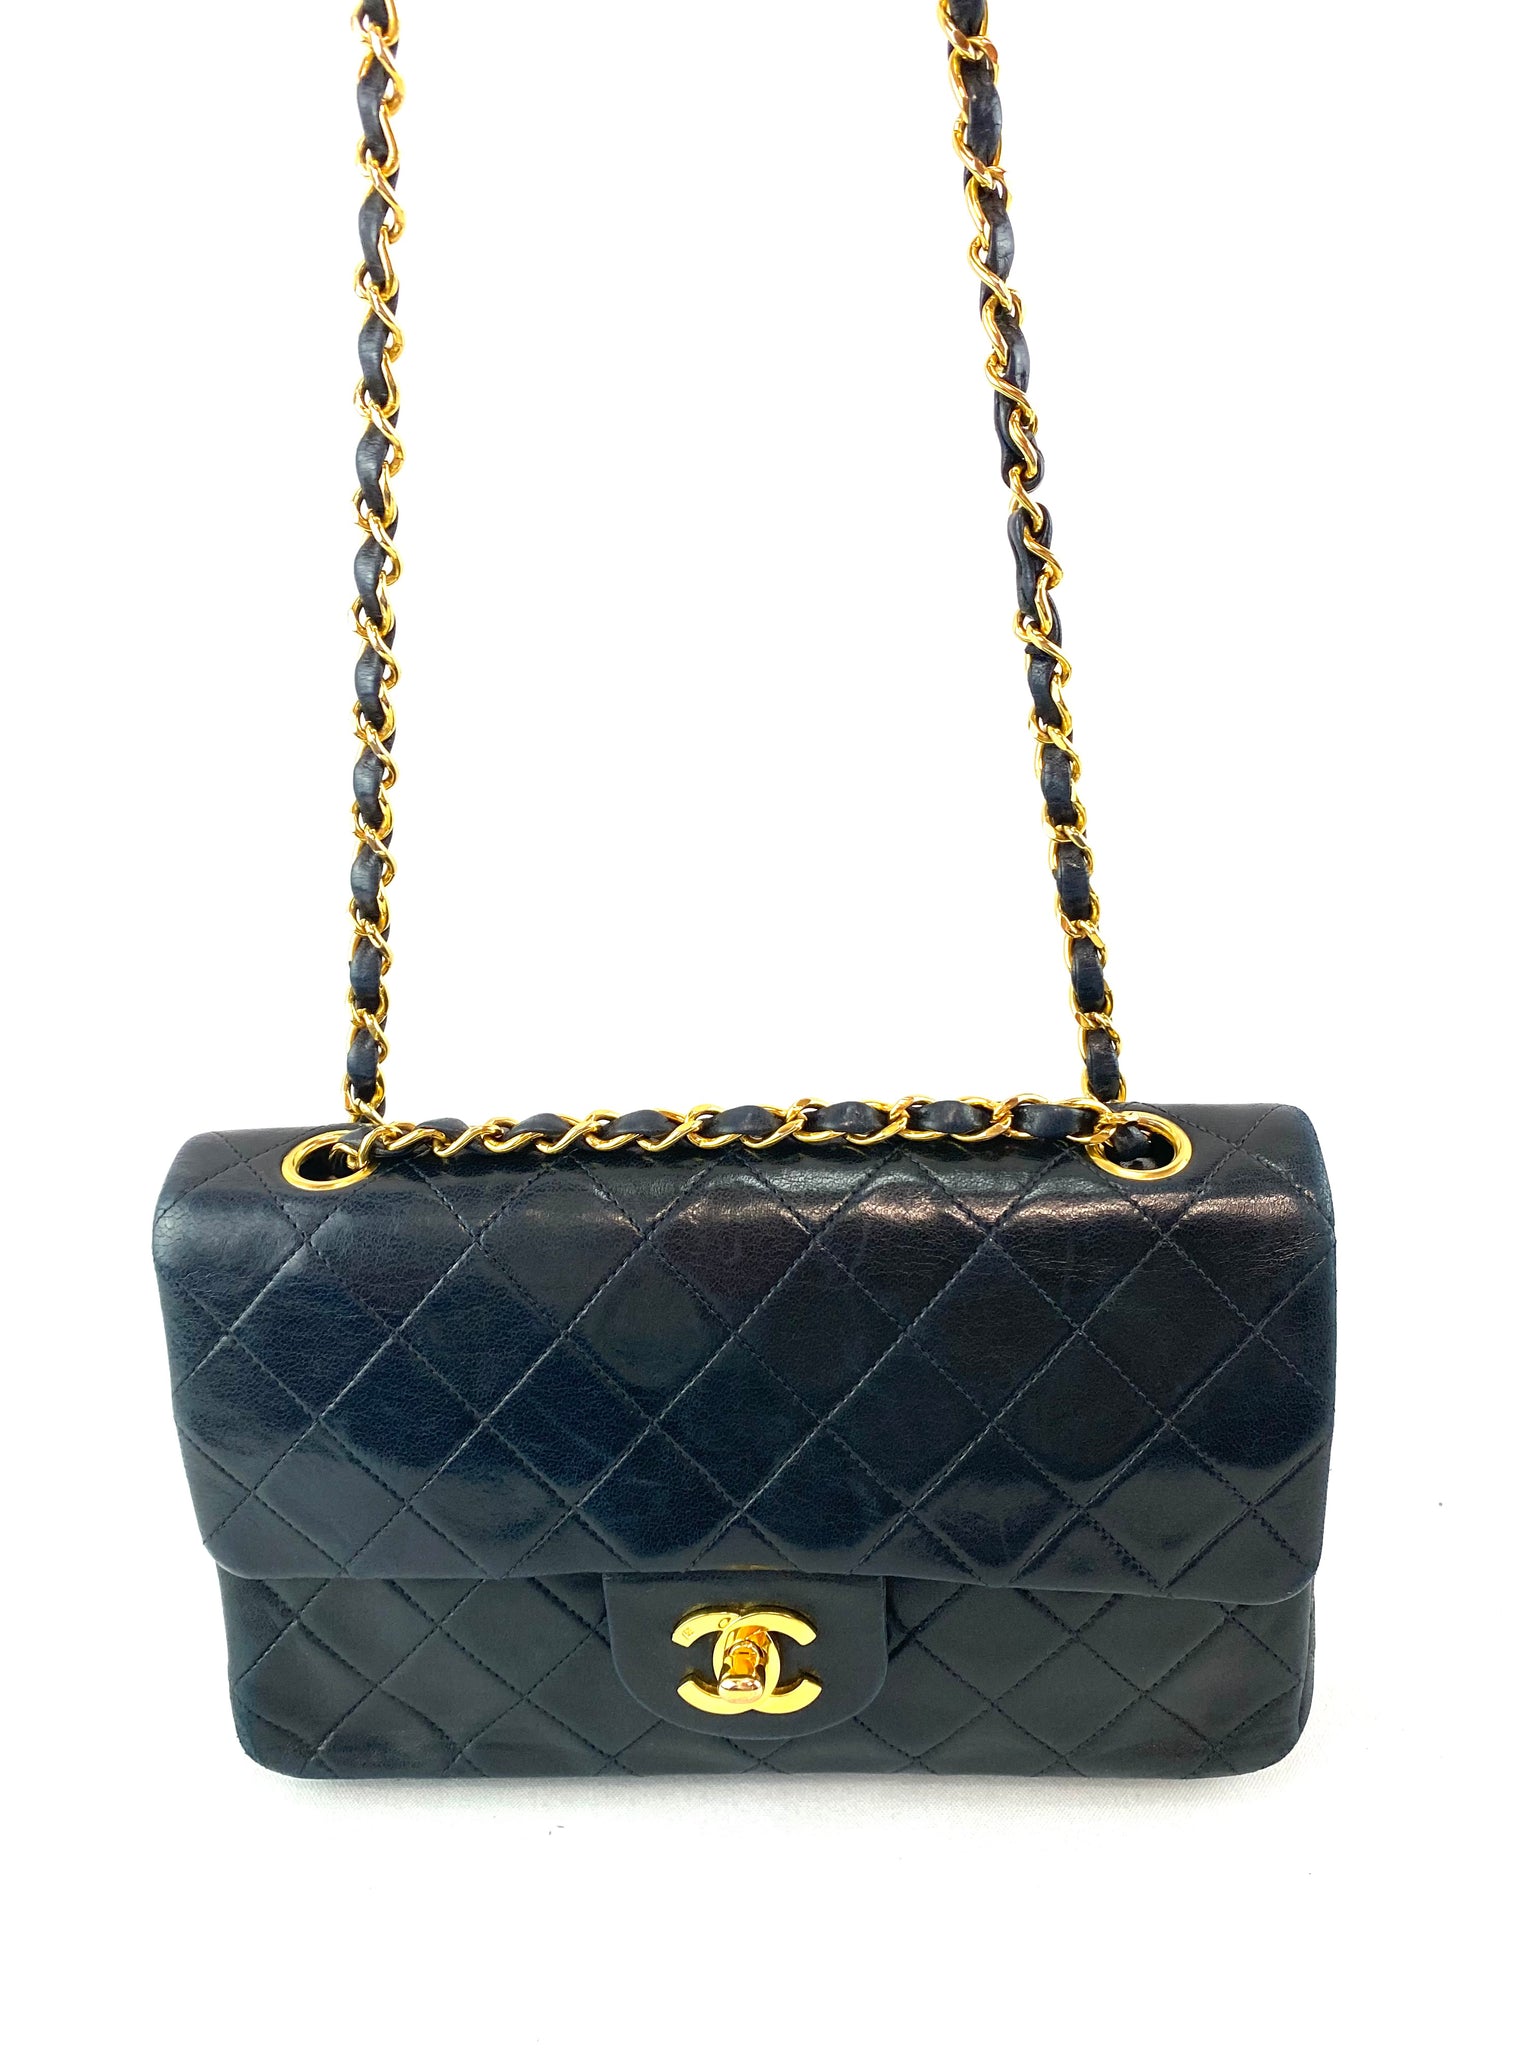 Chanel Small Black Lambskin Flap Bag – thankunext.us